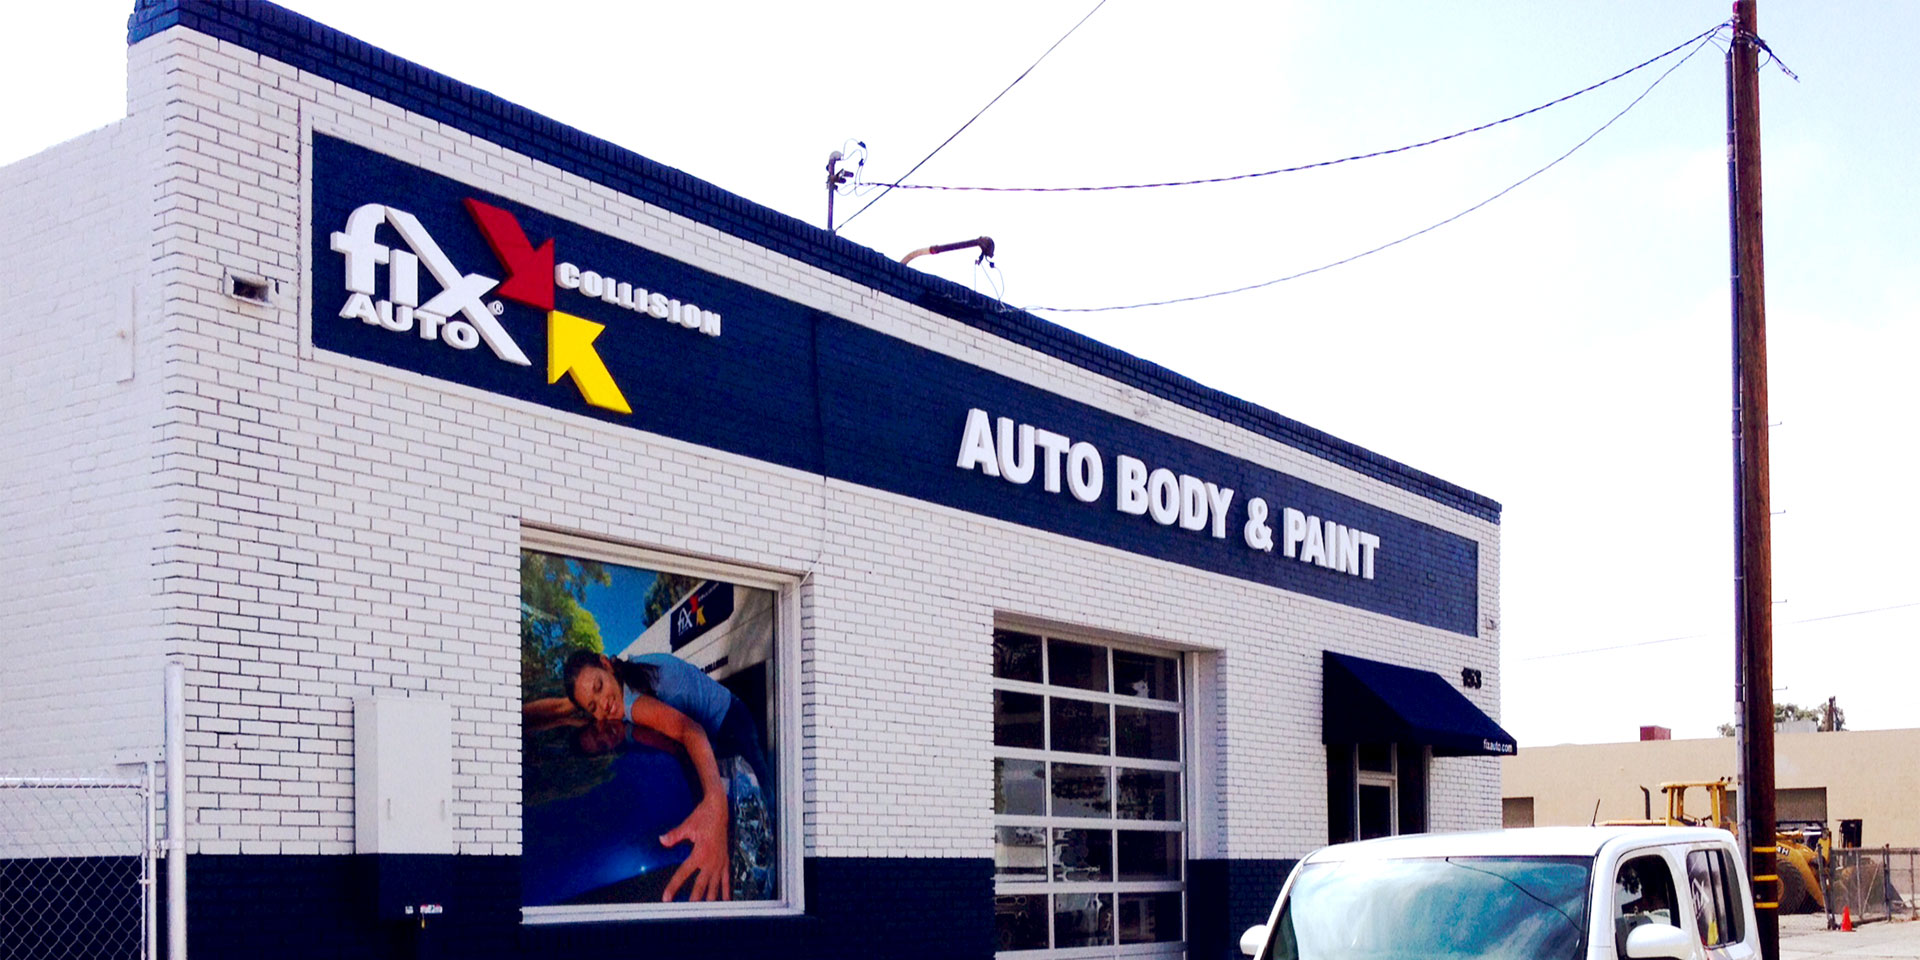 Fix Auto Orange Auto Body Shop Sign and Building Exterior